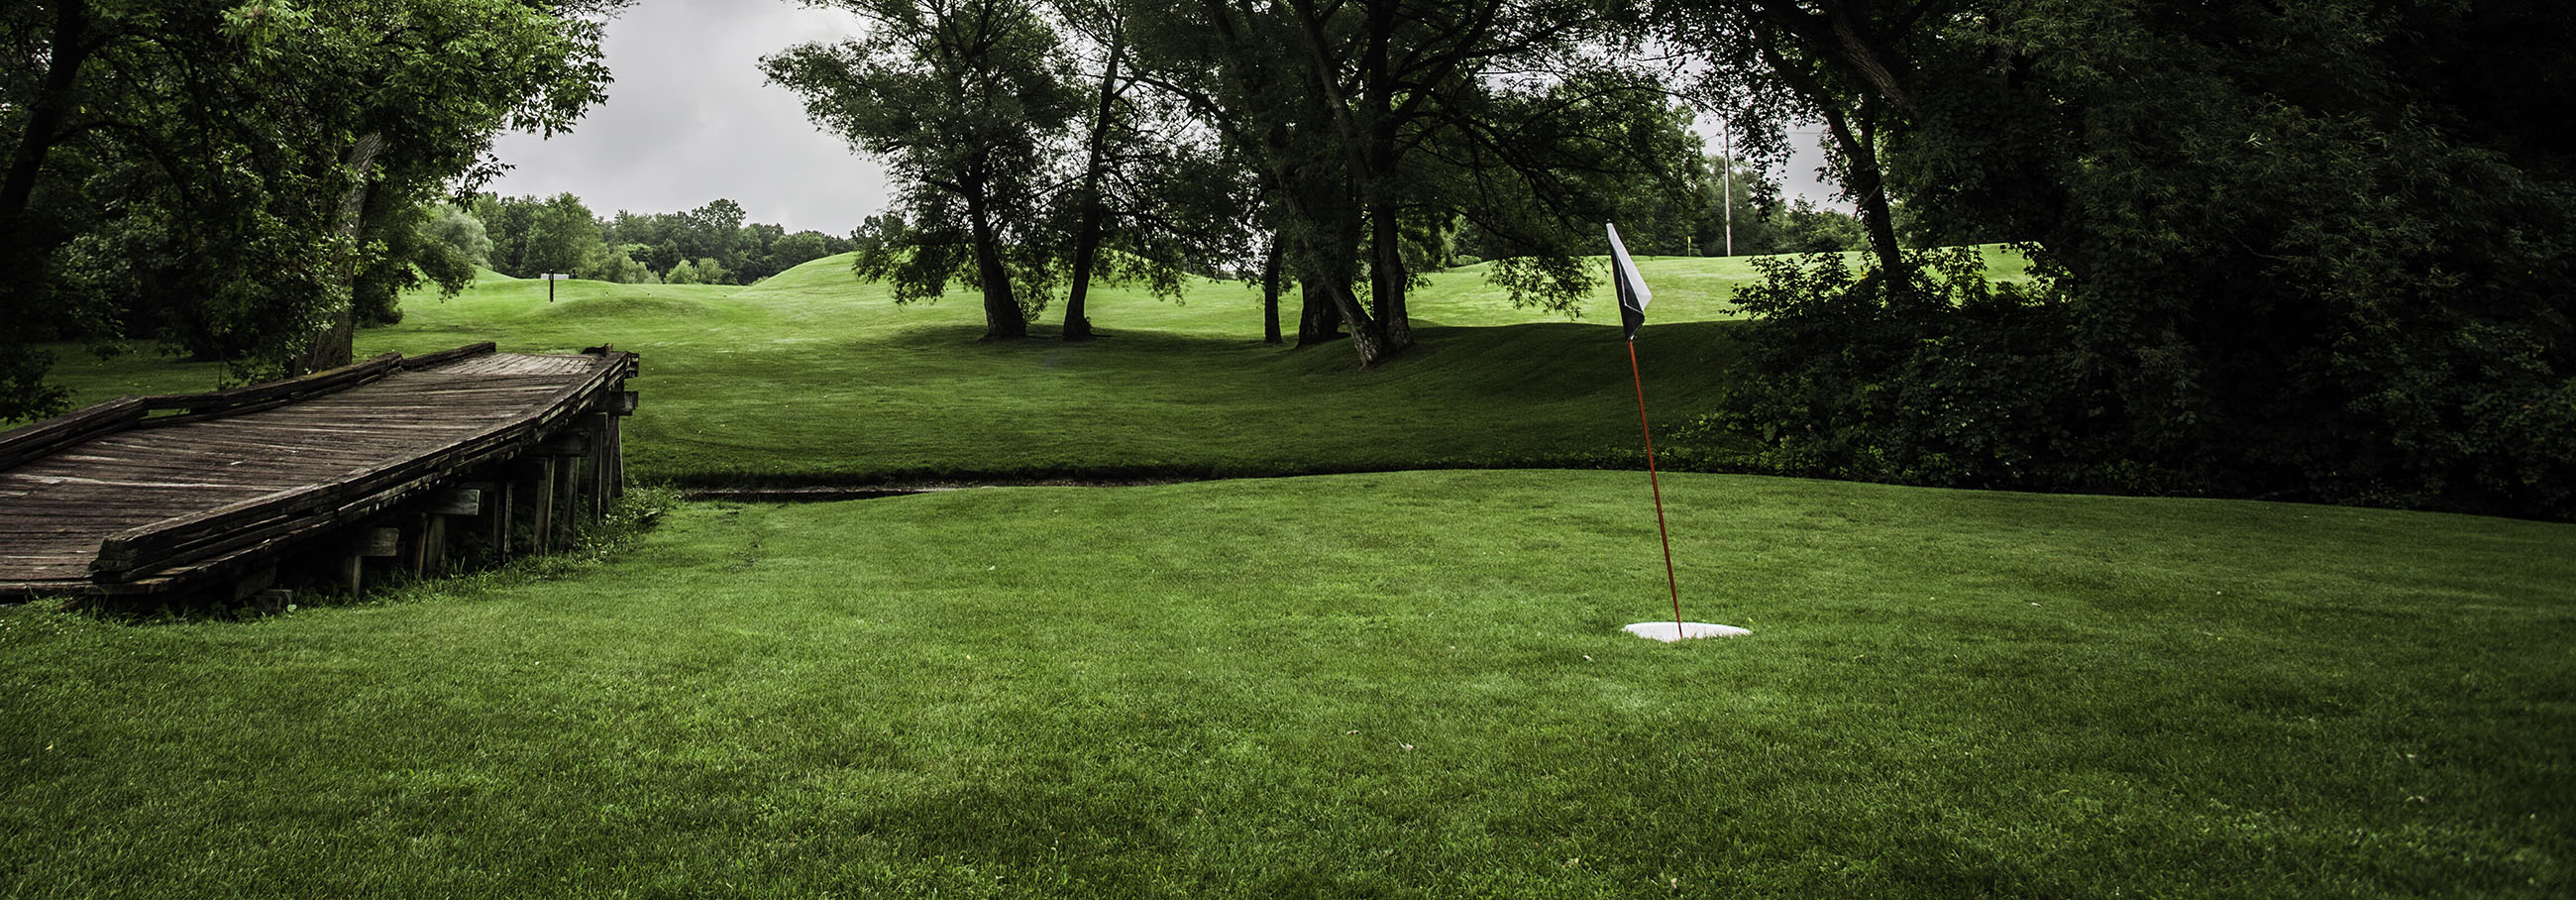 Par Three Golf Course and Footgolf Near Me Detroit | The Myth Par Three Golf Course